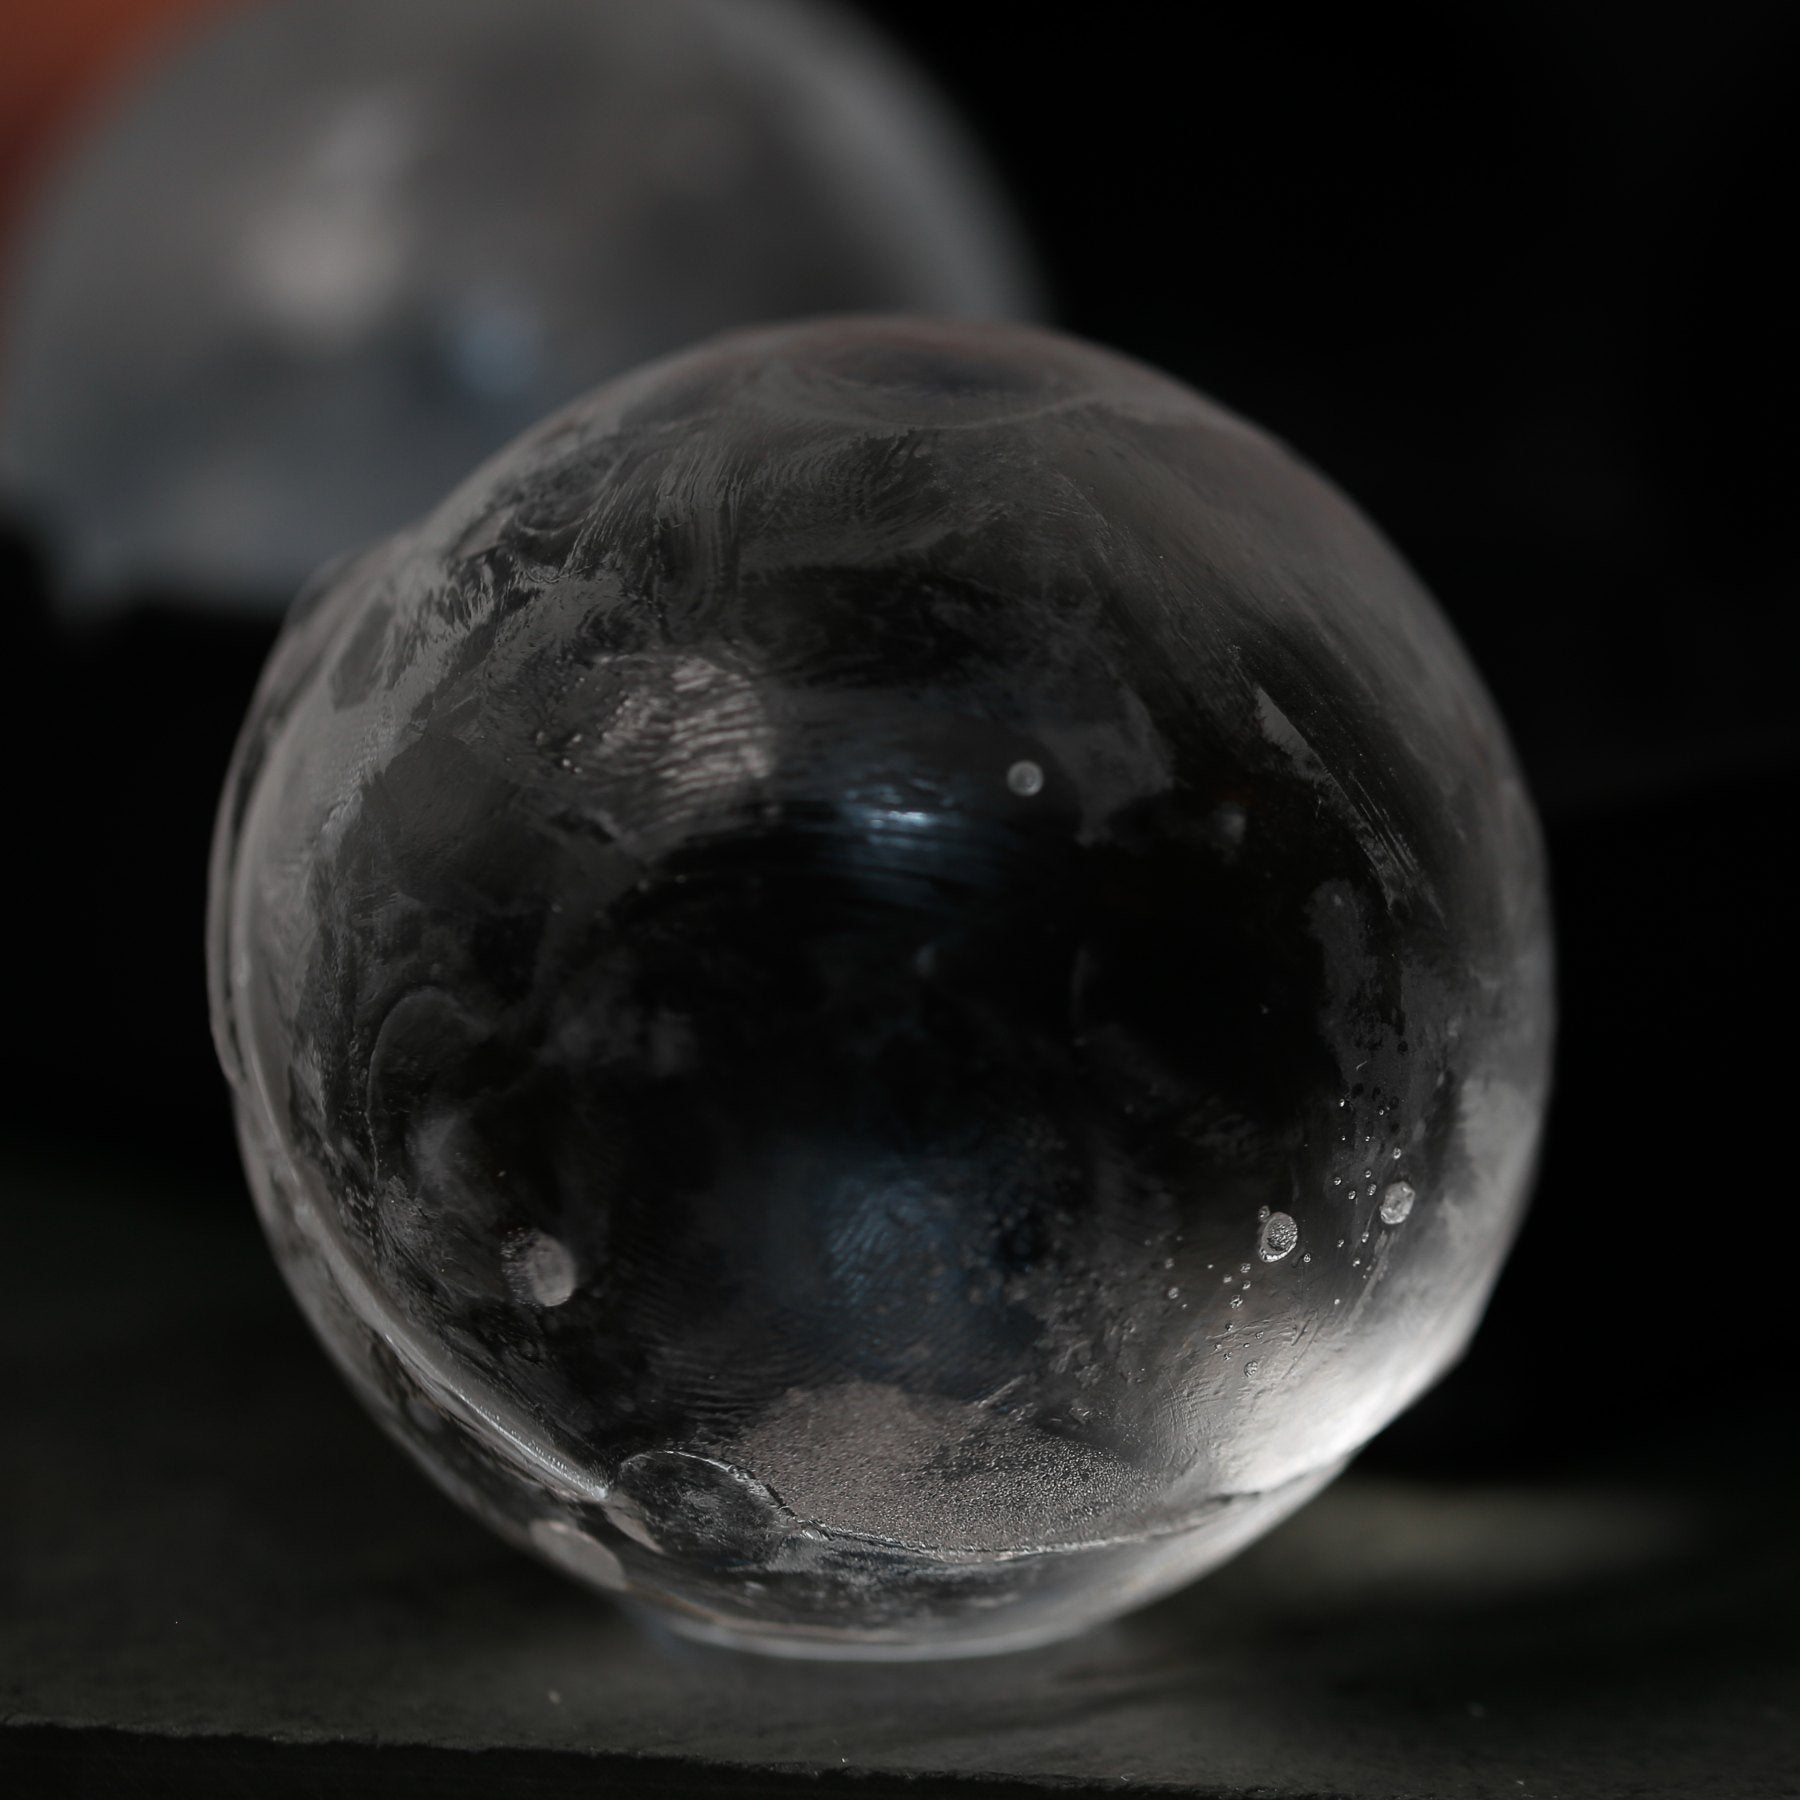 Sphere Ice - Whiskey Ice & Cocktail Ice Balls - Dramson